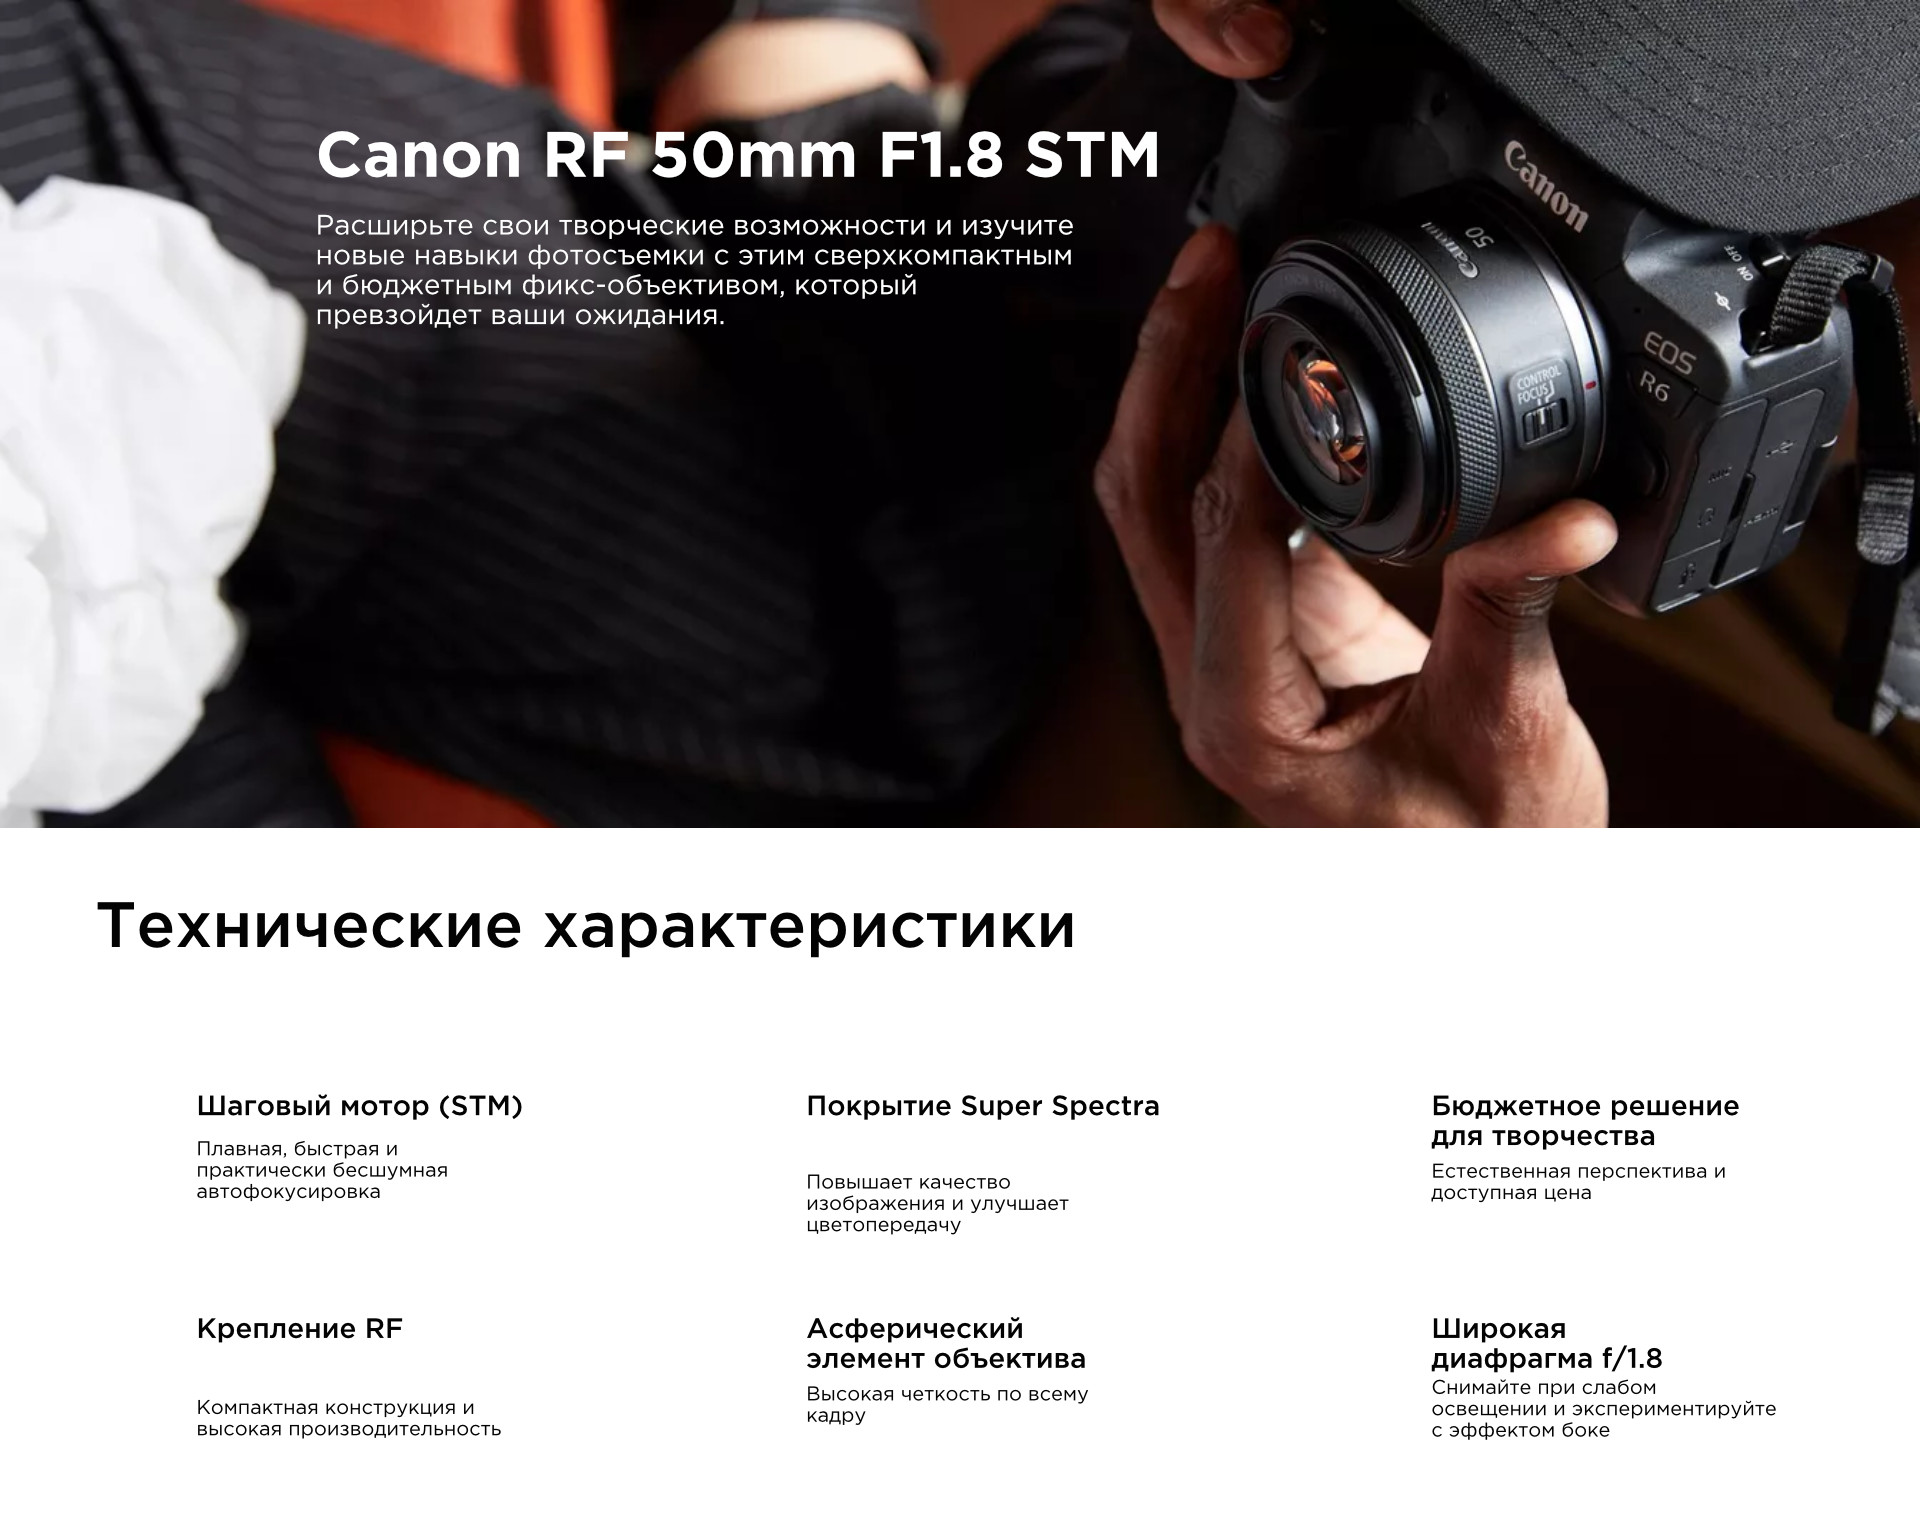 Canon R6